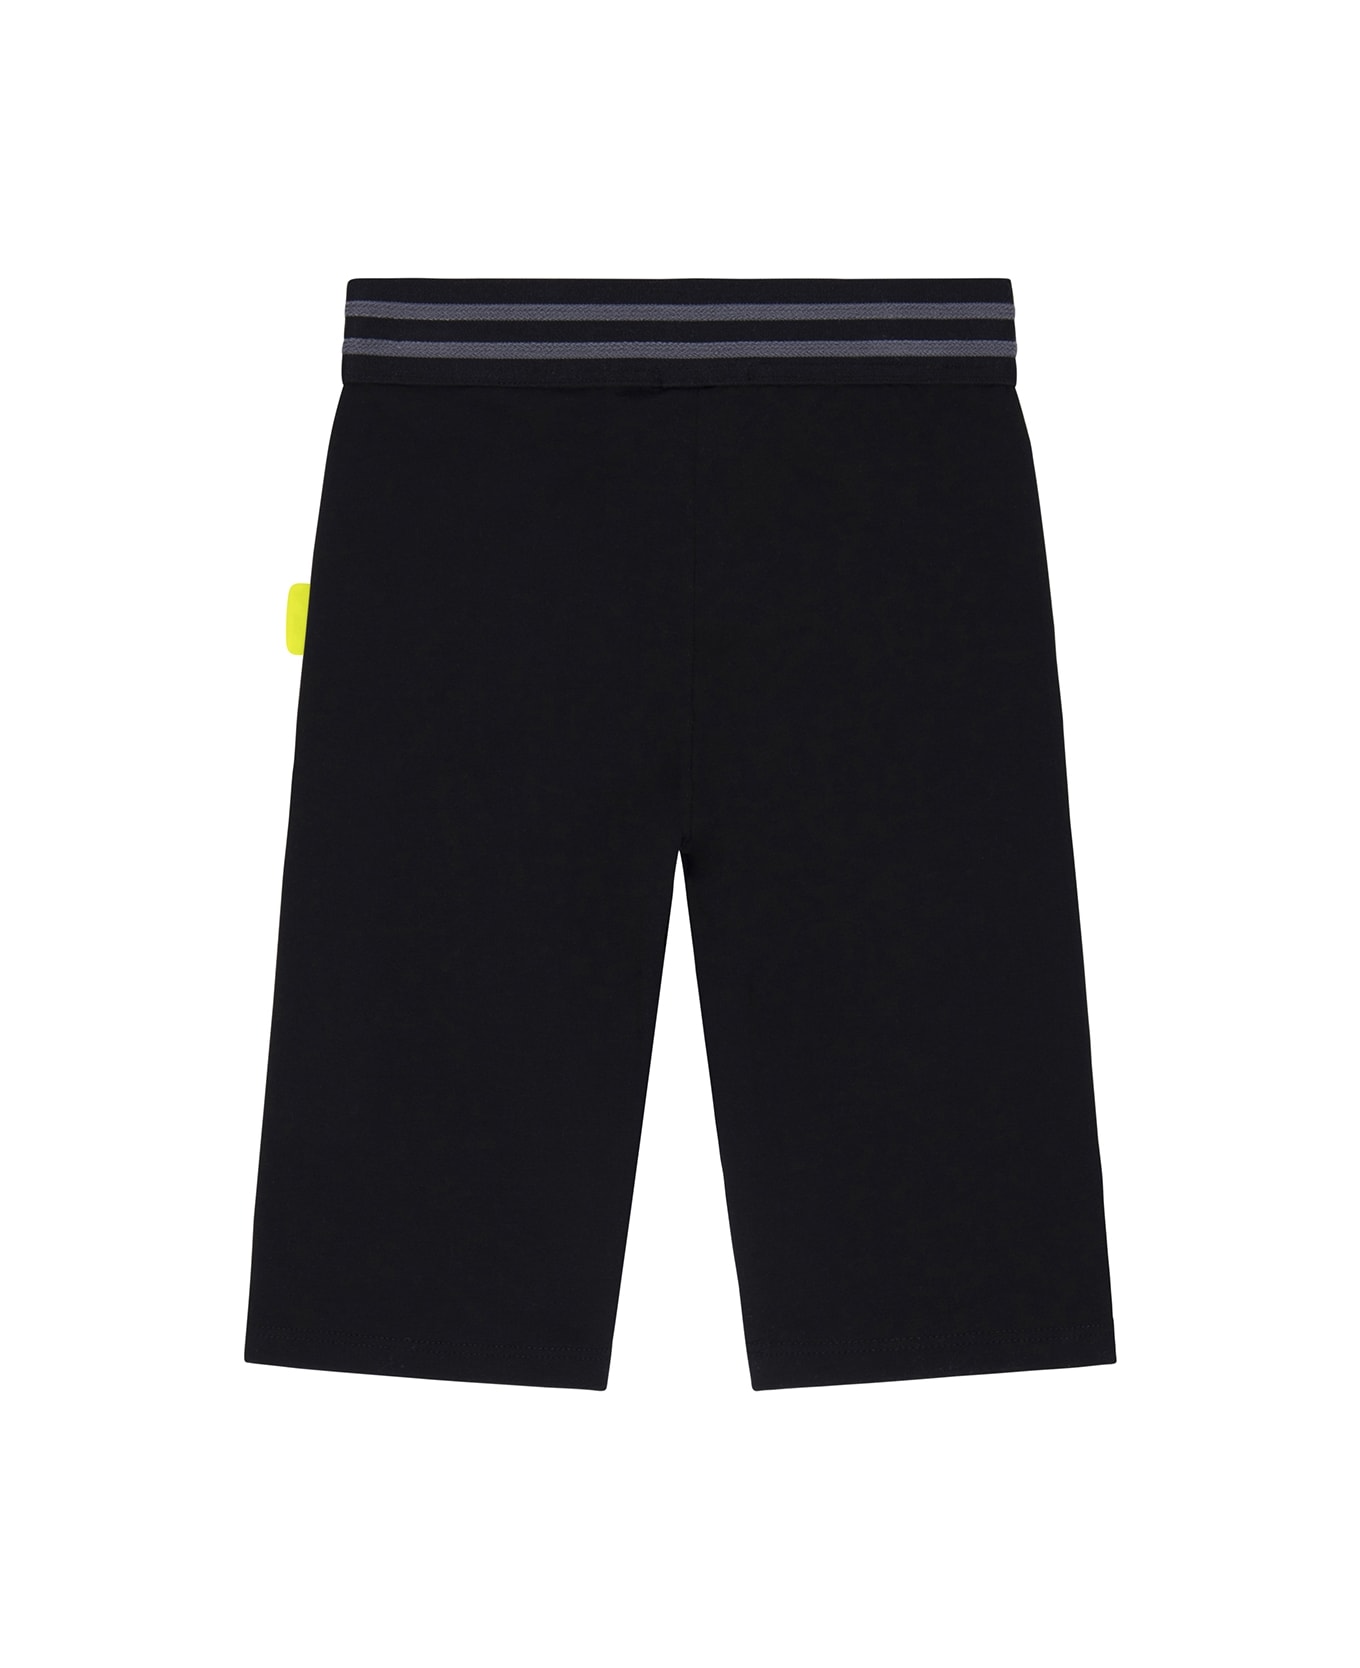 Barrow Shorts With Print - Black ボトムス